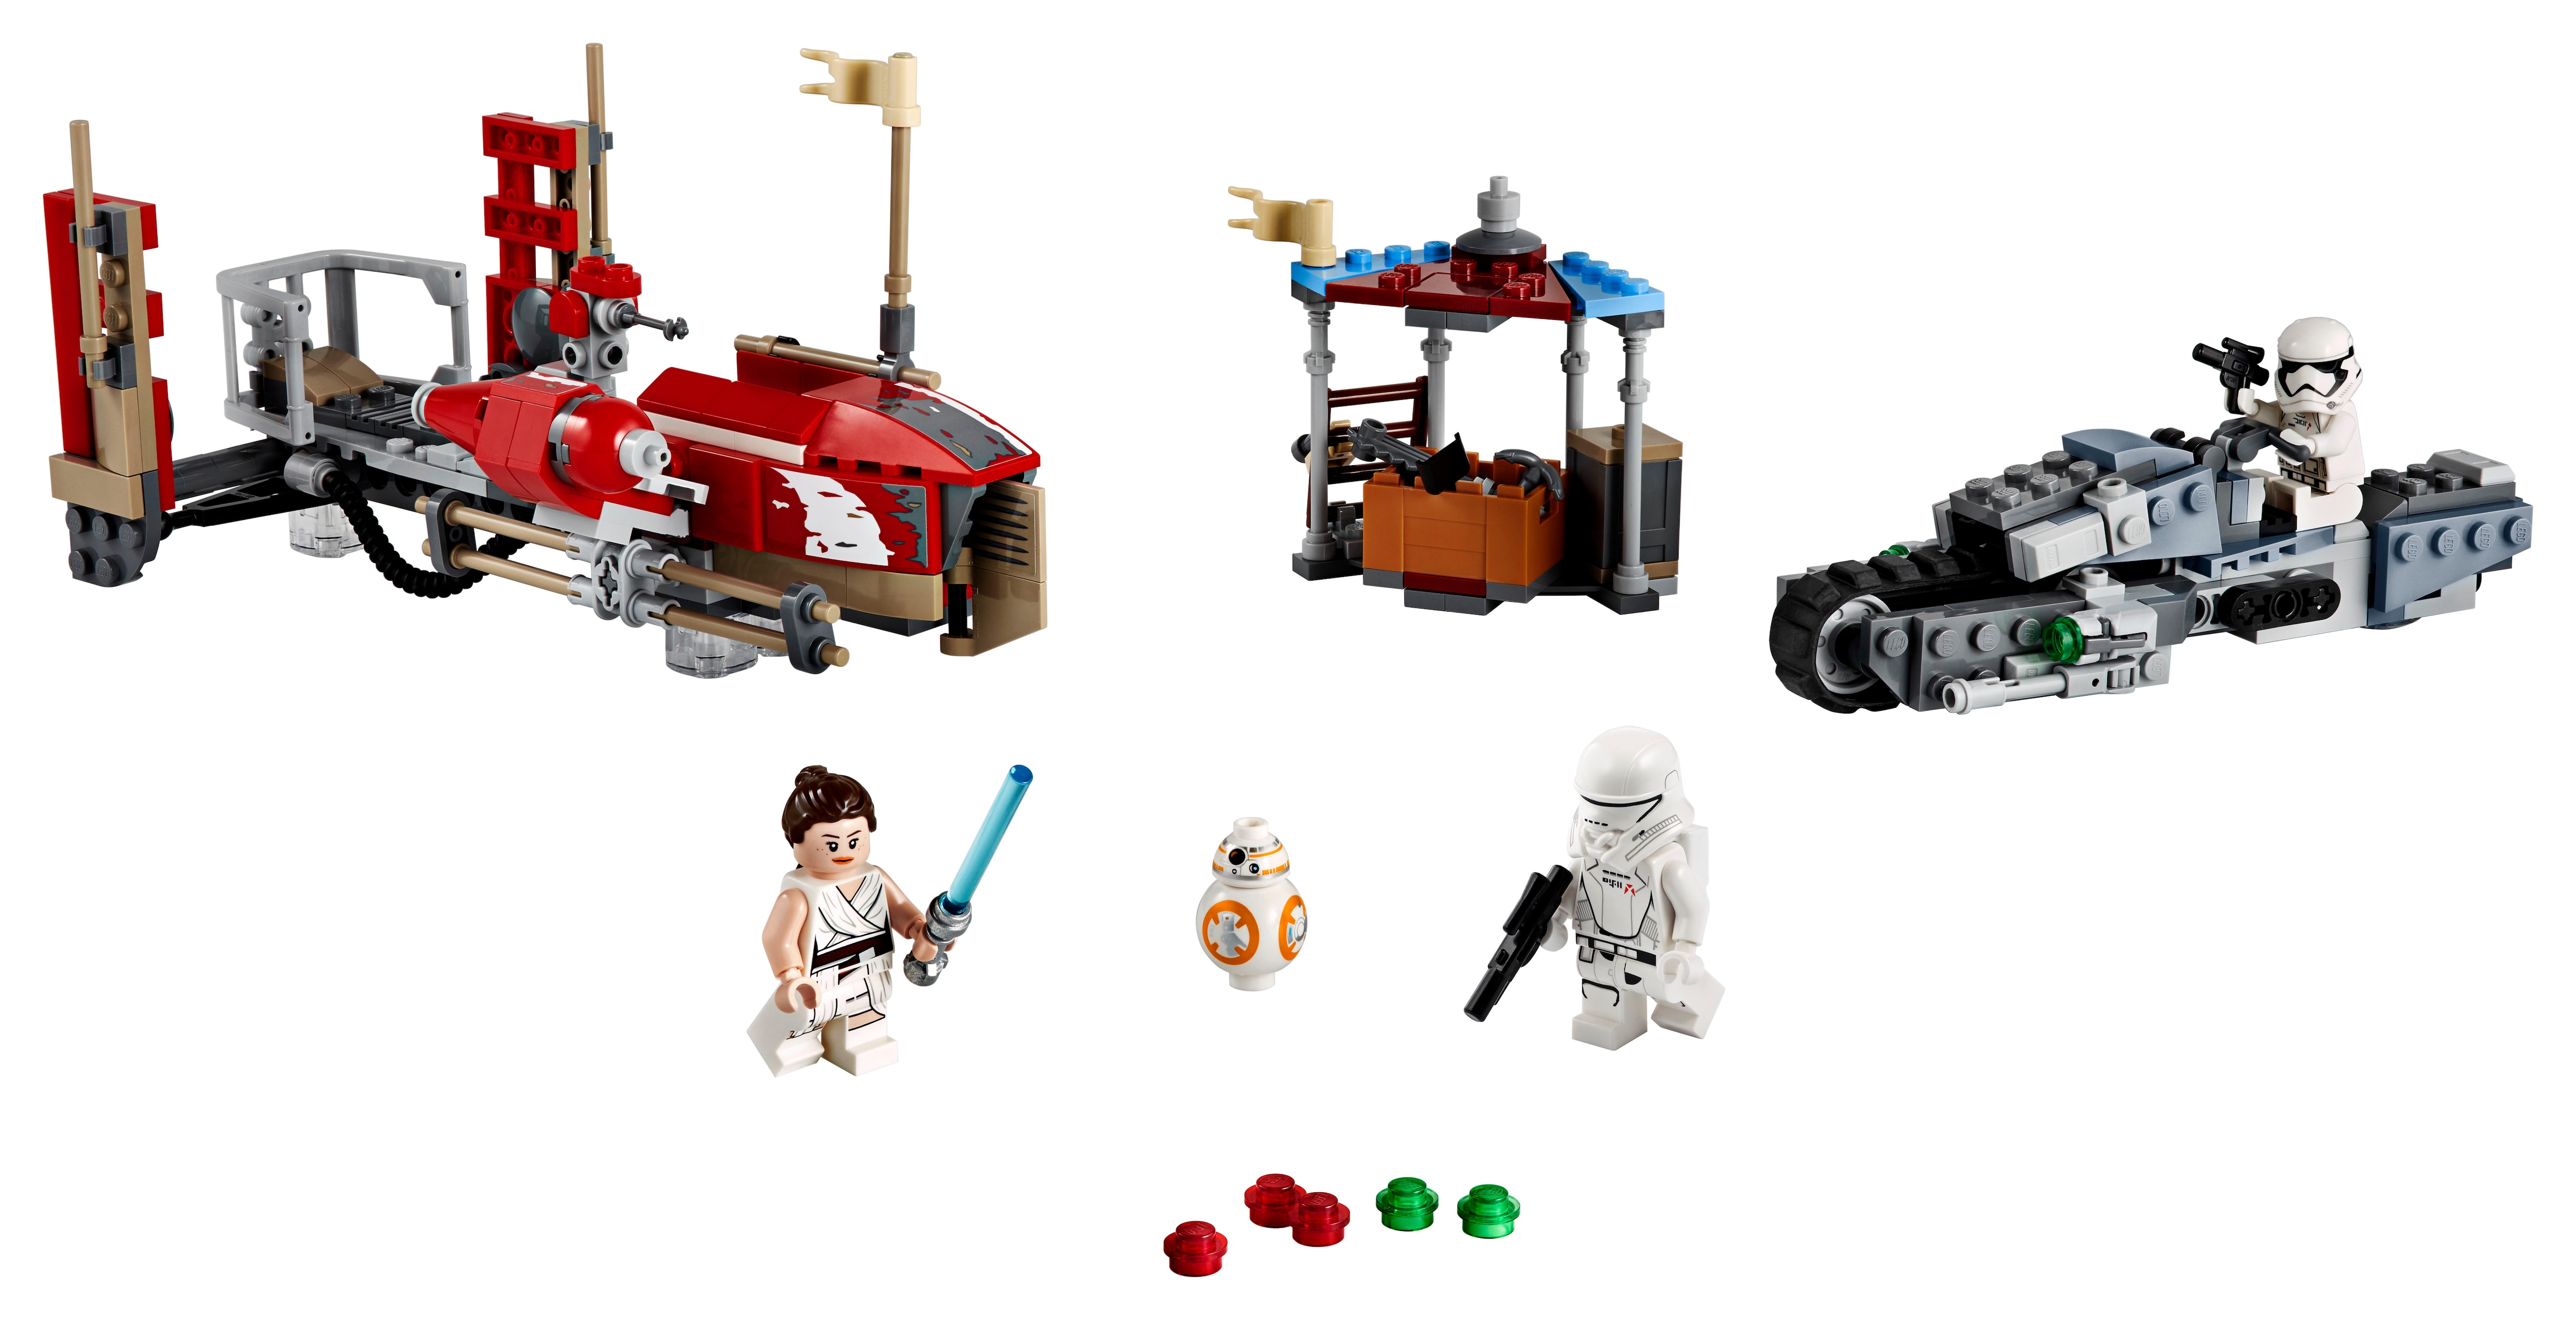 LEGO Star Wars speeder set (The Rise of Skywalker)